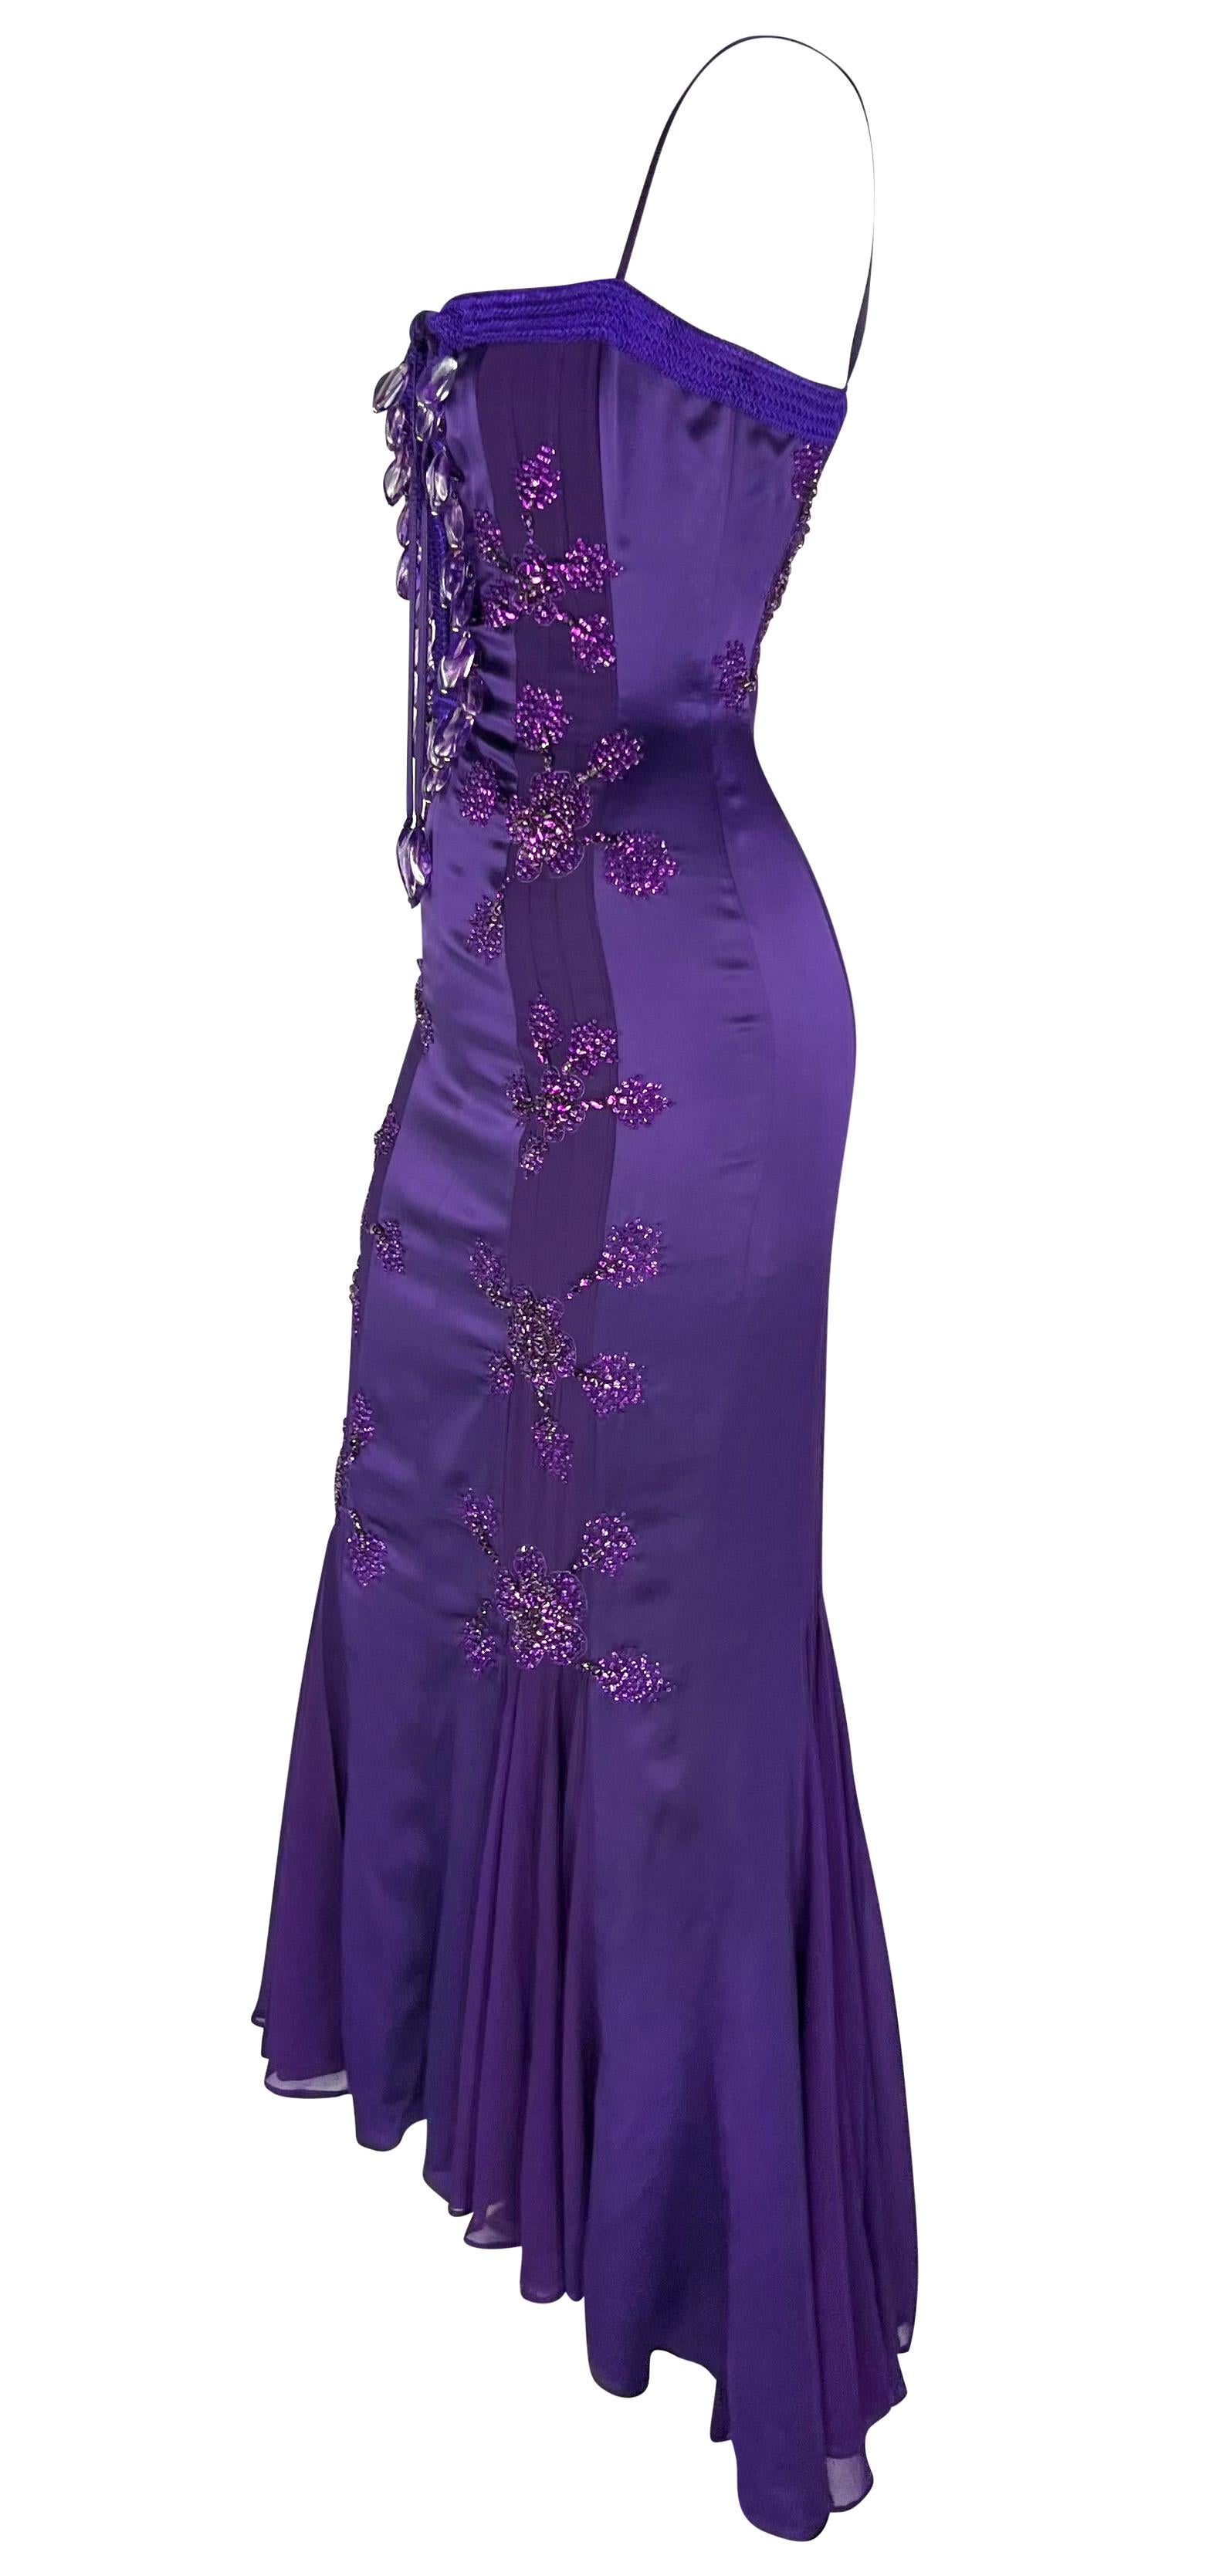 S/S 2005 Emanuel Ungaro by Giambattista Valli Rhinestone Purple Lace-Up Gown For Sale 5